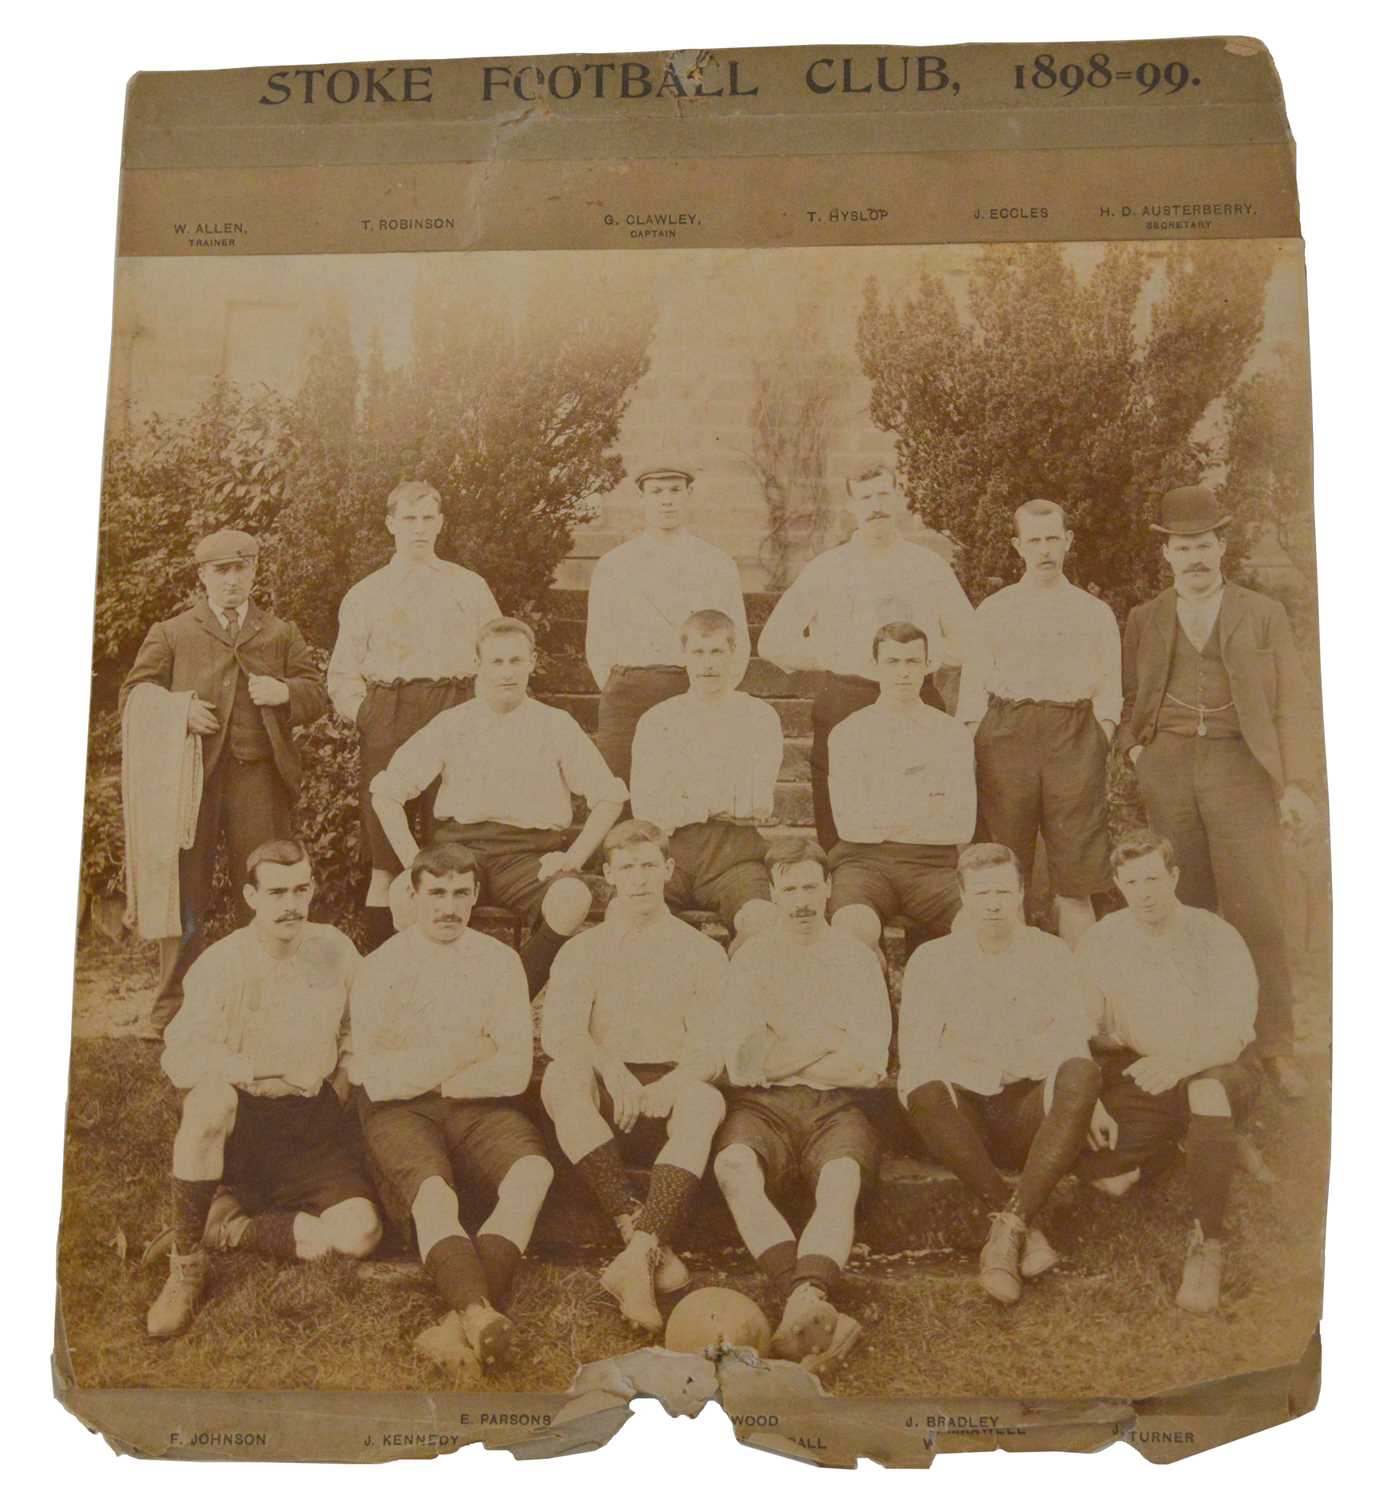 Lot 43 - Stoke Football Club, 1898-1899 team photograph